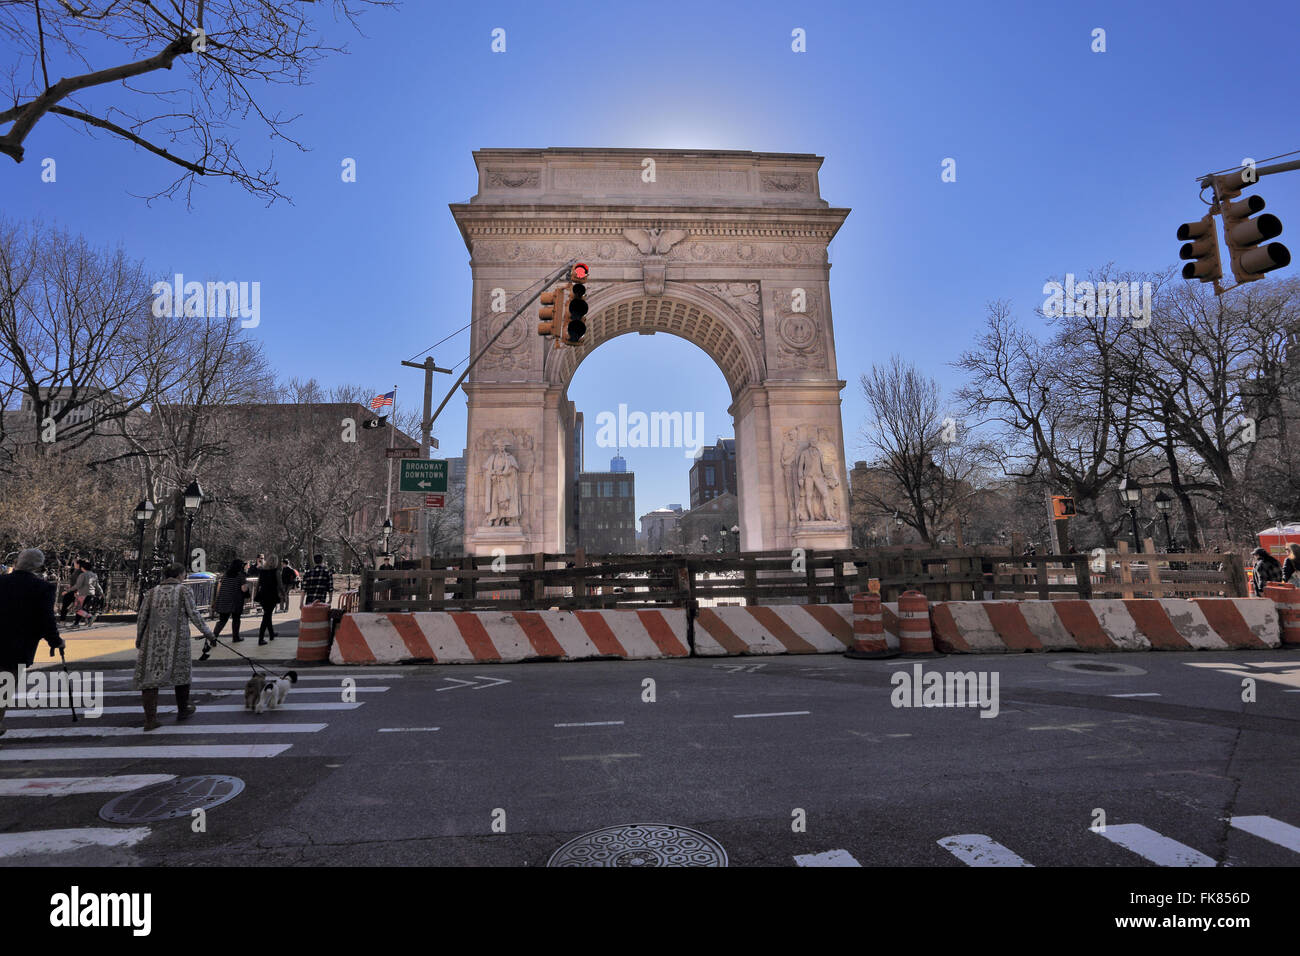 Washington Sqaure Park and Arch Greenwich Village New York City Stock Photo